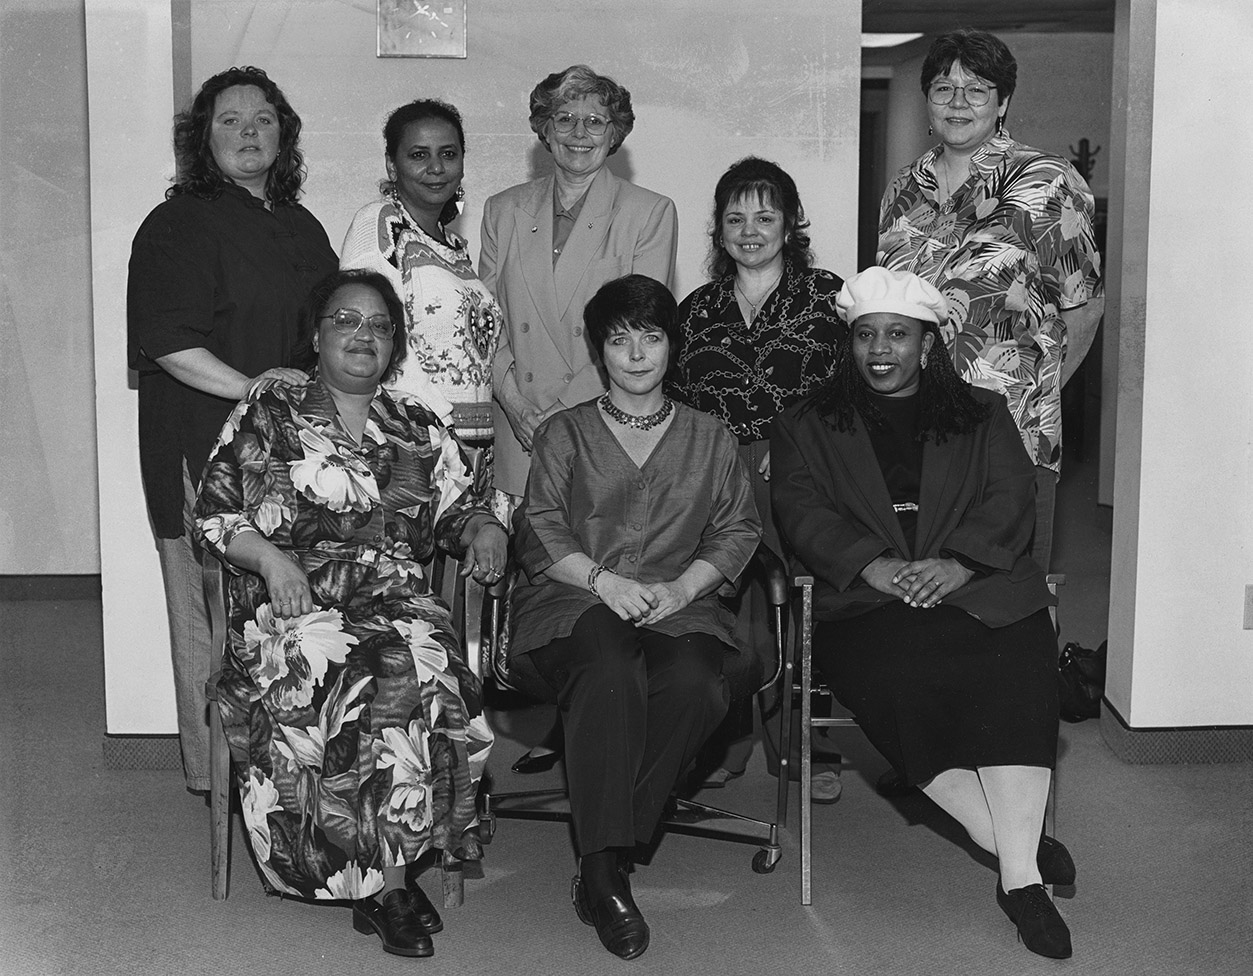 communityalbums - Nova Scotia Advisory Council on the Status of Women Council Members, 1996